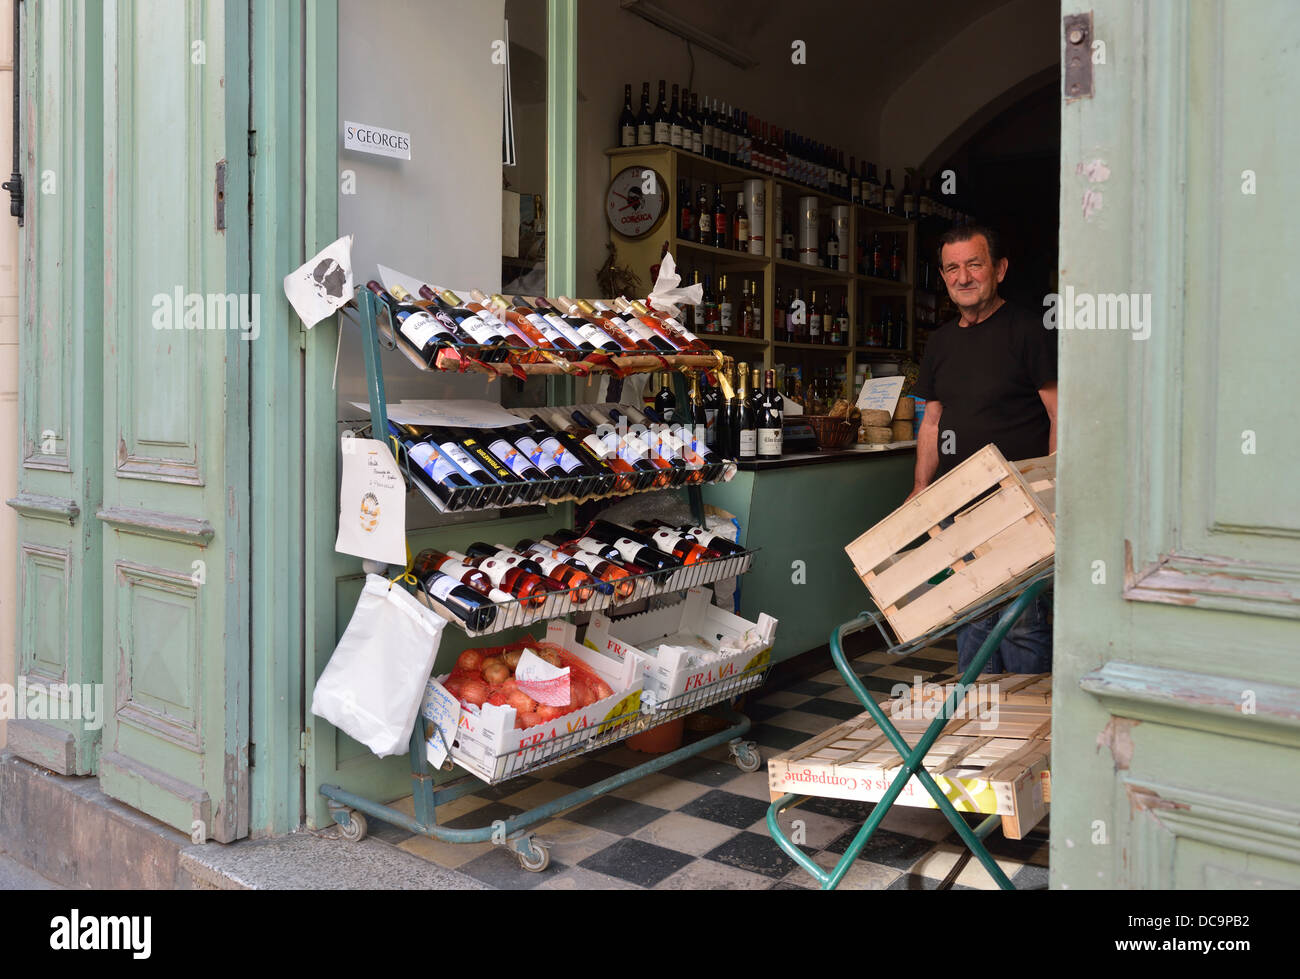 Einkaufsladen Shop, Ajaccio, Korsika, Frankreich Stockfoto